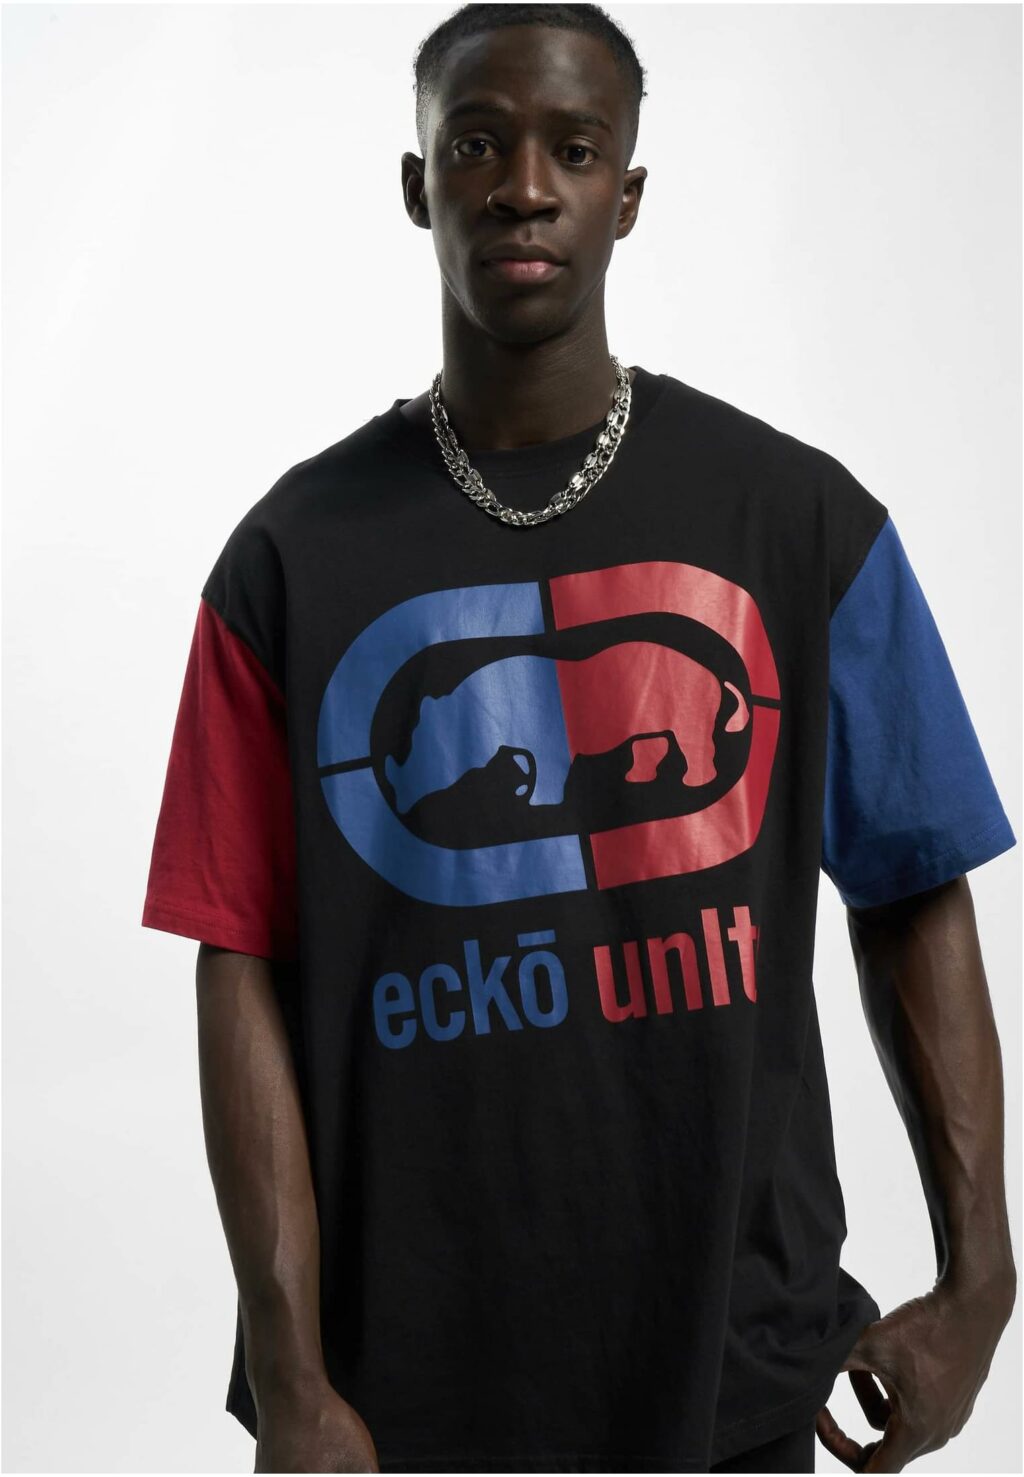 Ecko Unltd. Grande T-Shirt black/red/blue ECKOTS1137